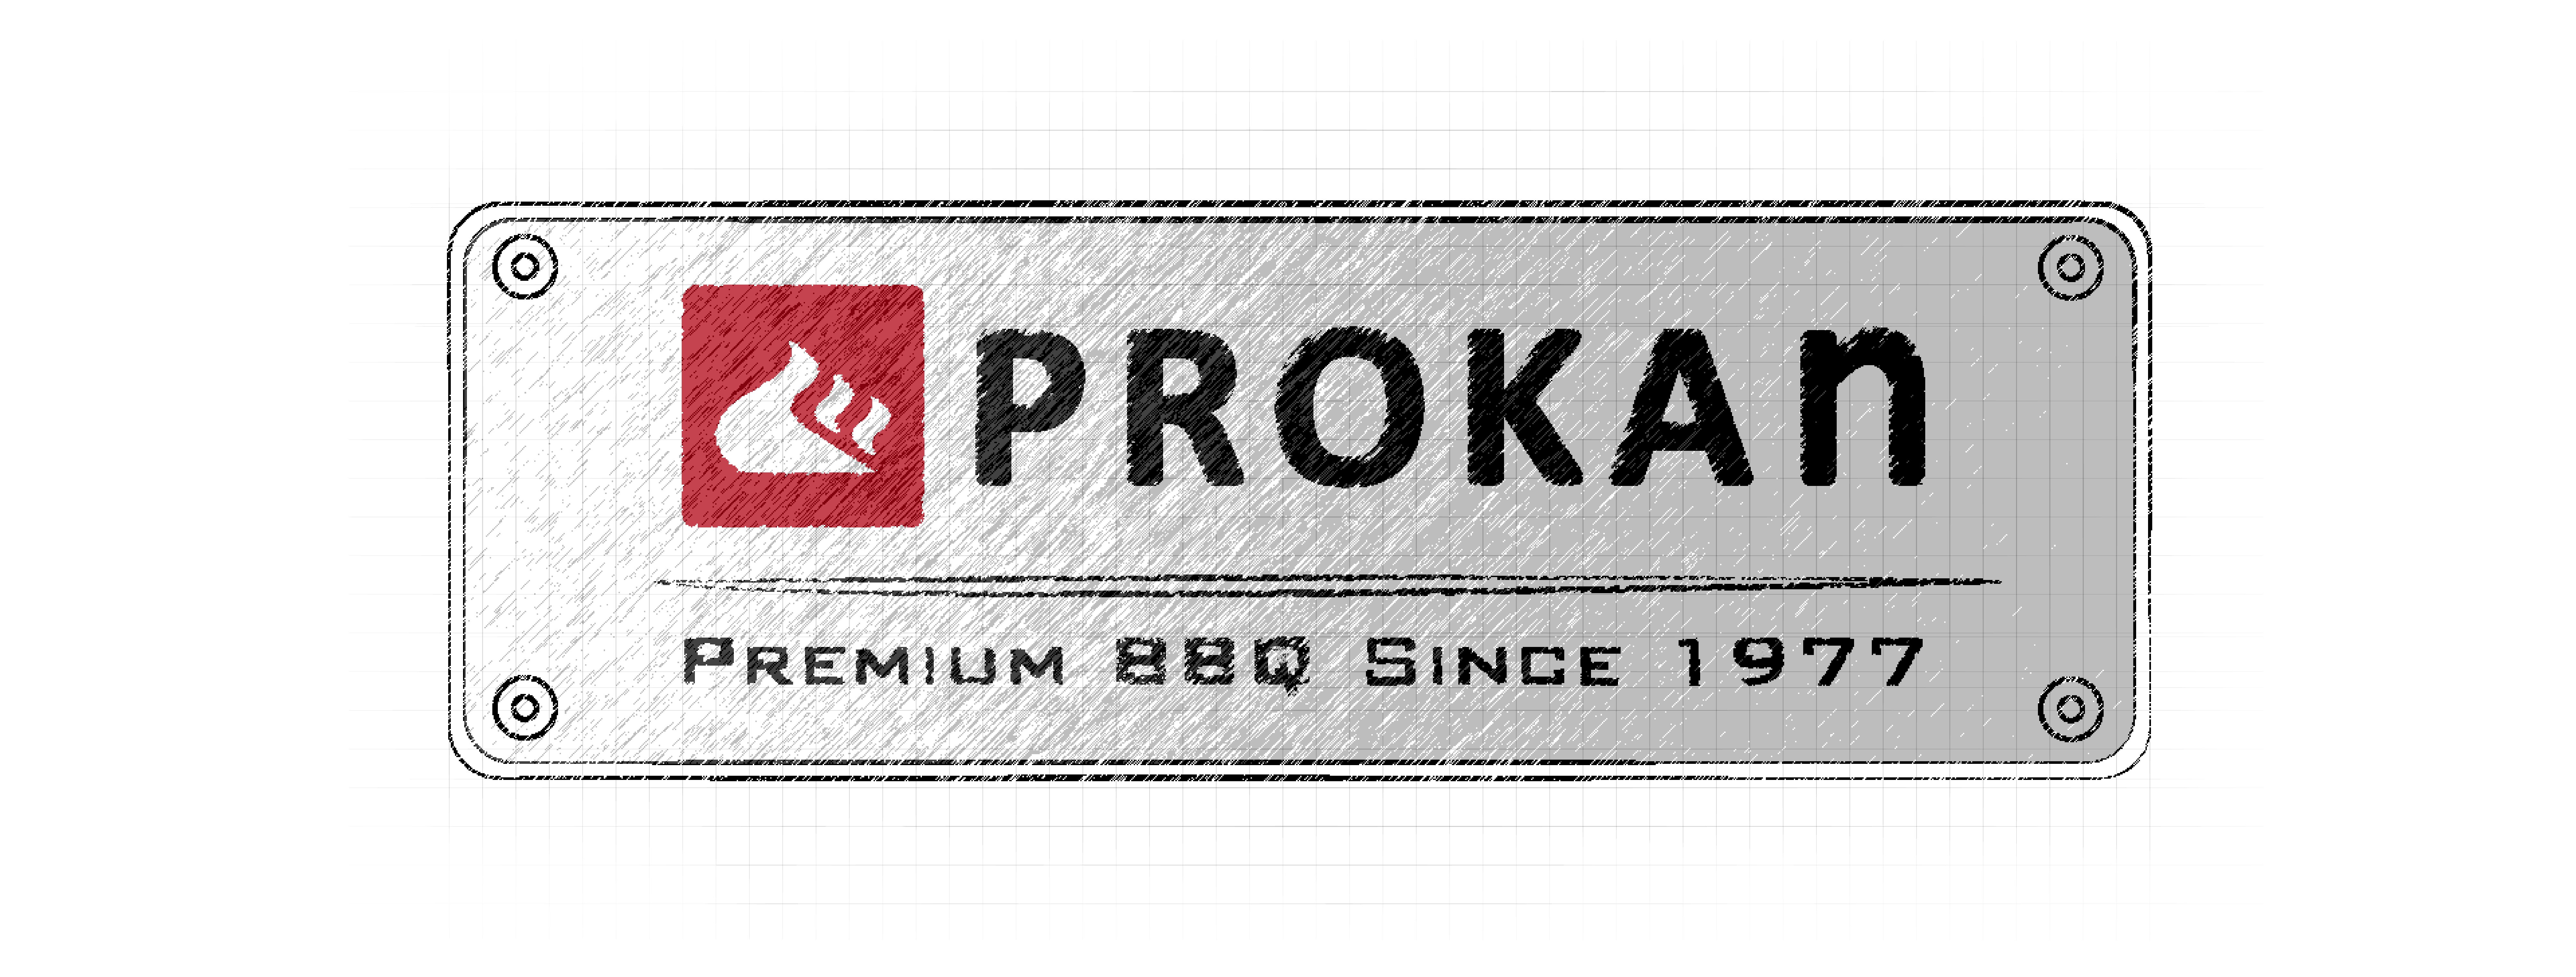 Cast Iron Hotplate for Prokan GT/ CGI04 Prokan